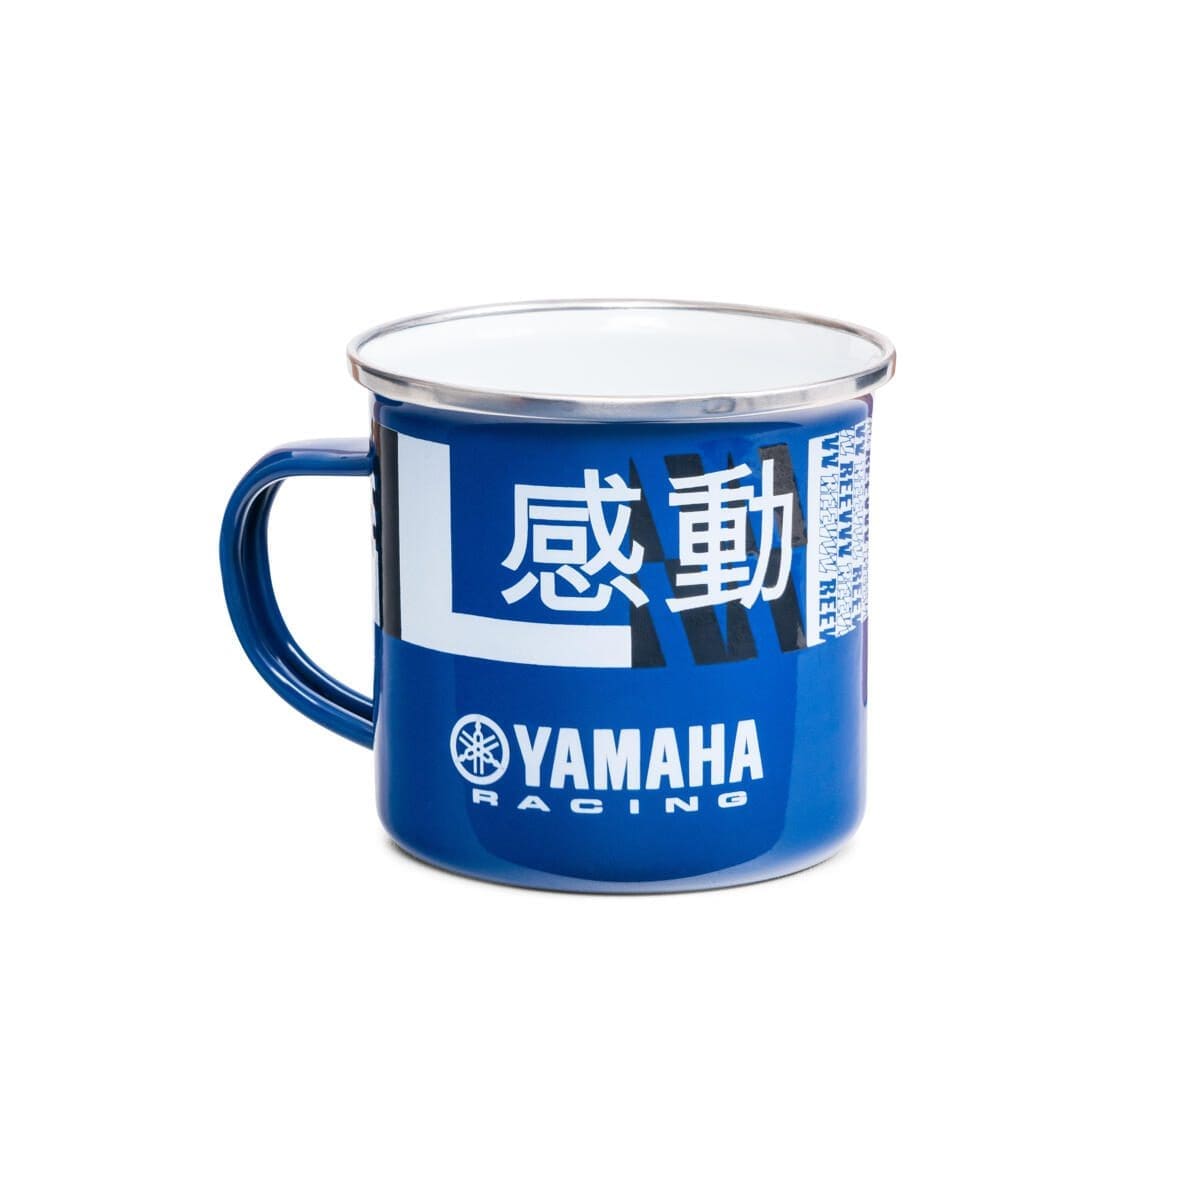 Yamaha Enamel mug